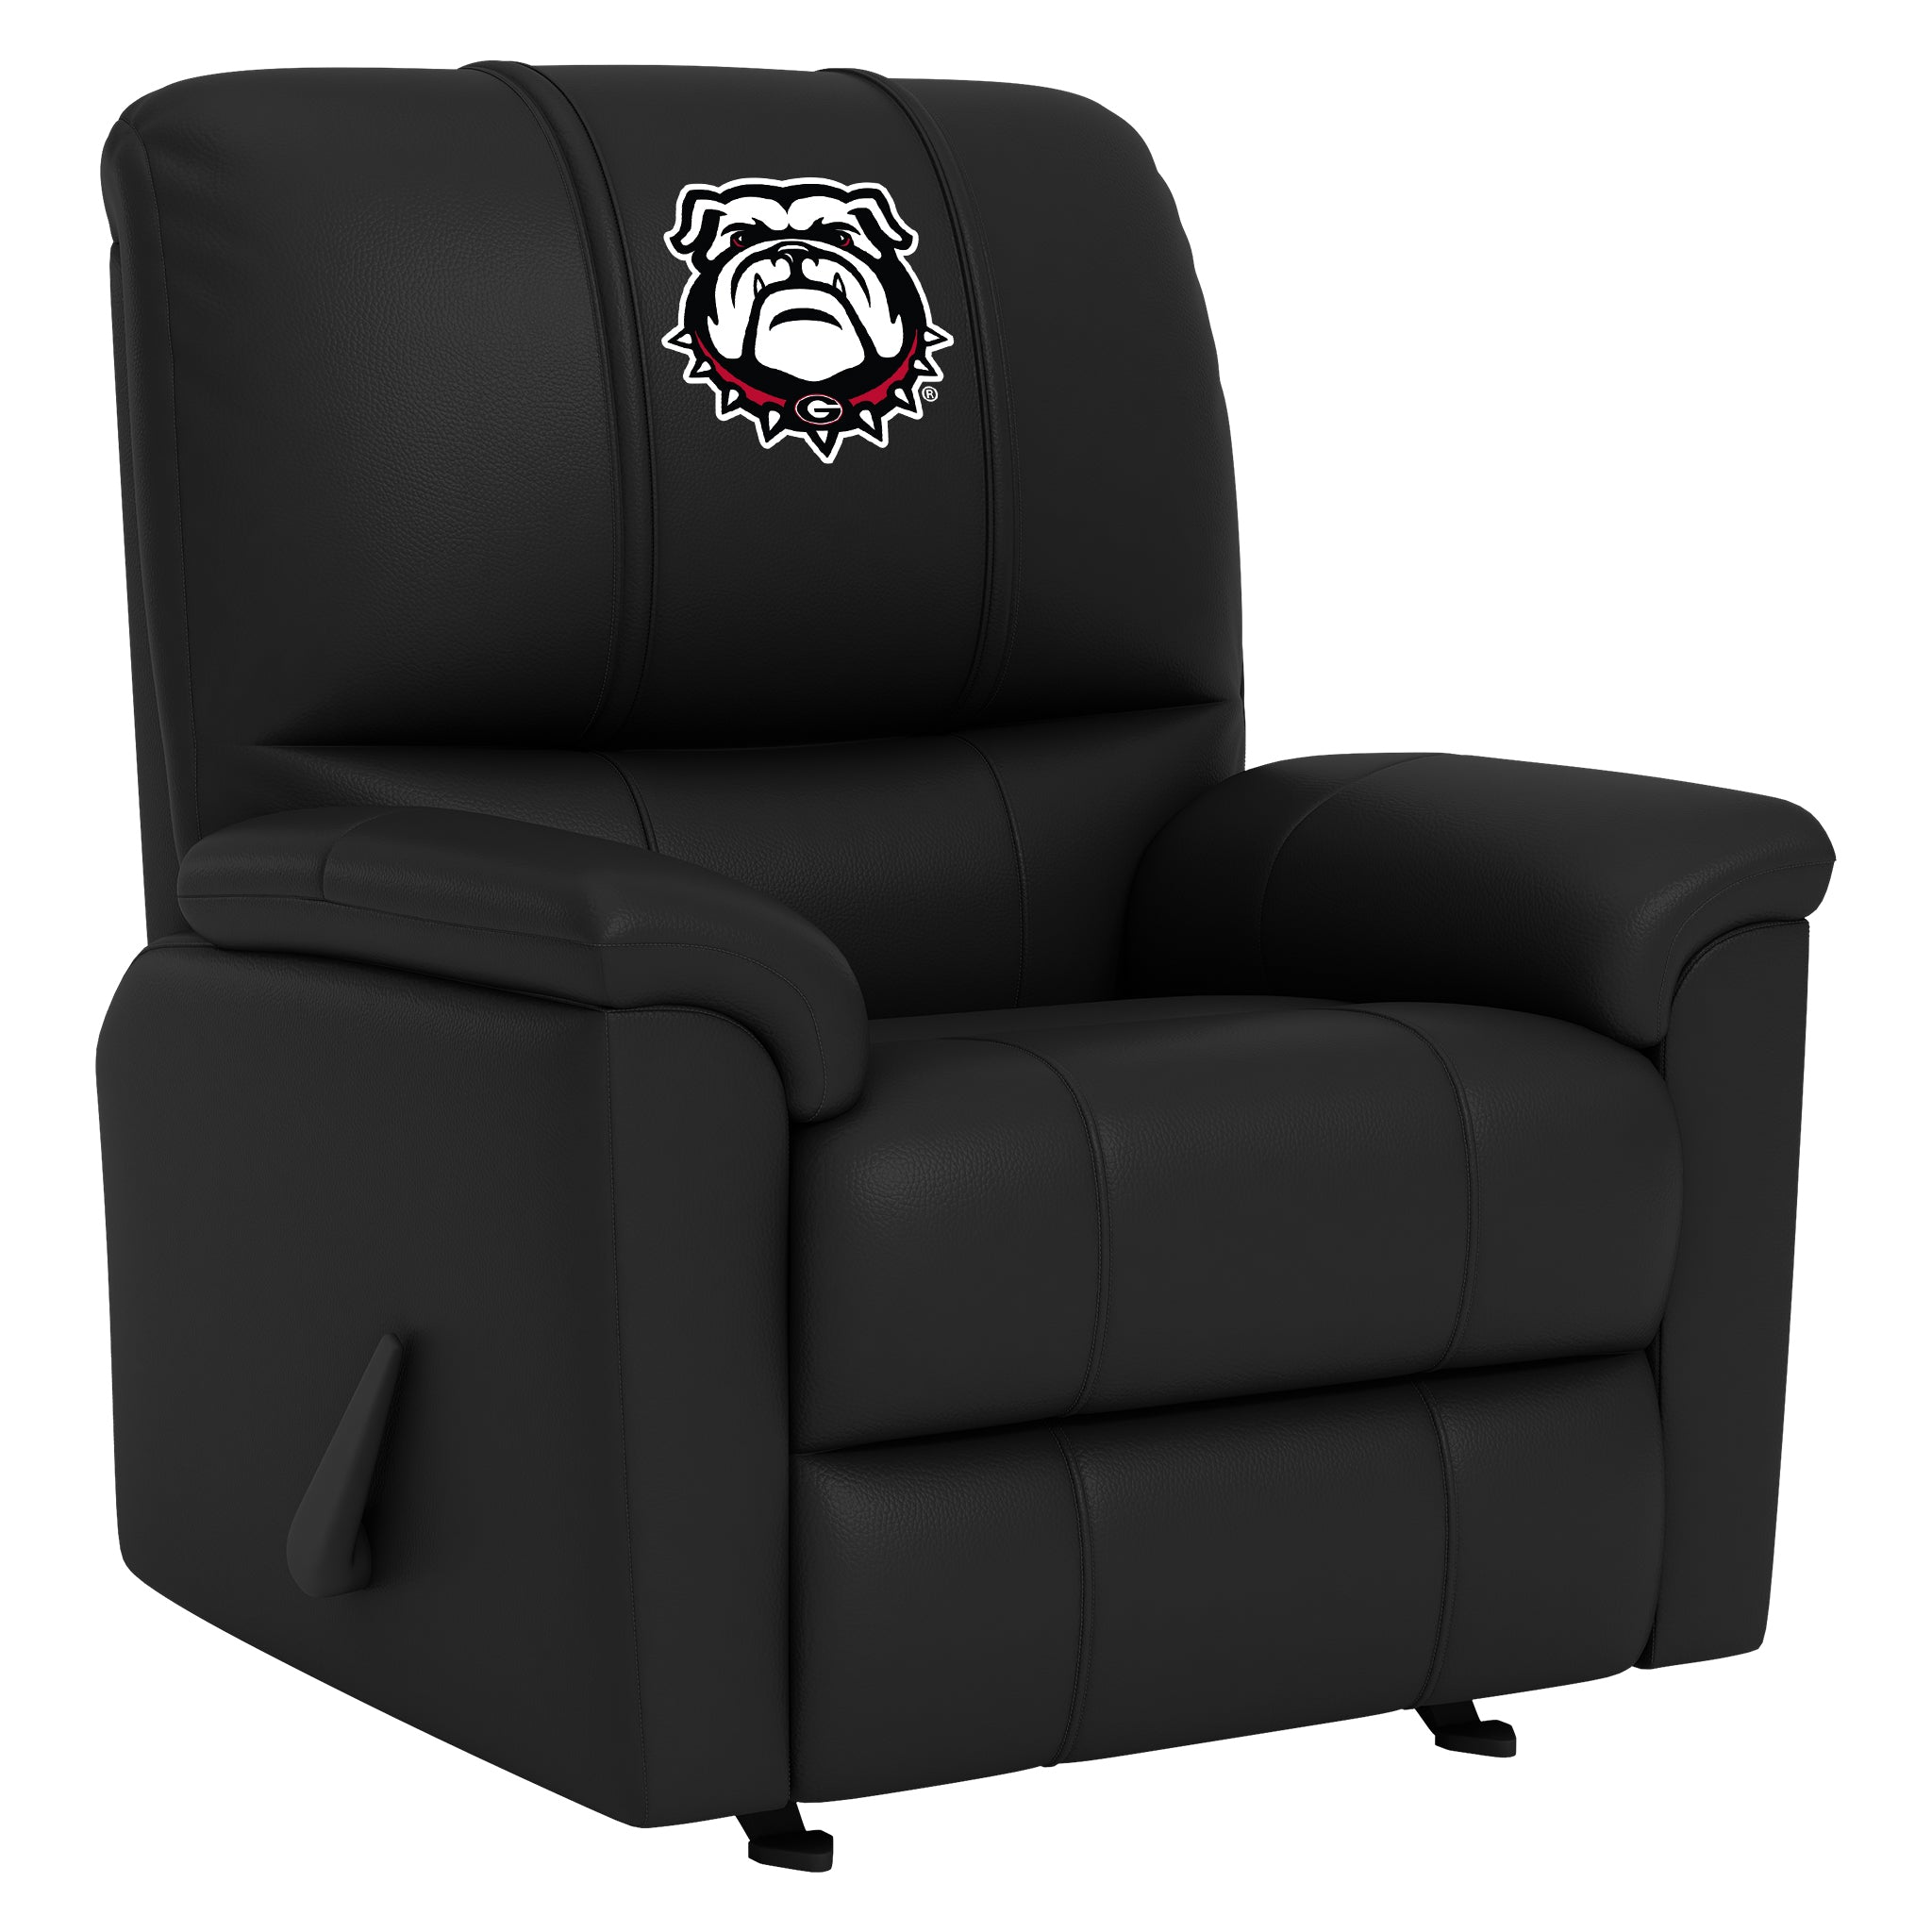 Georgia Bulldogs Silver Club Chair with Georgia Bulldogs Alternate Logo